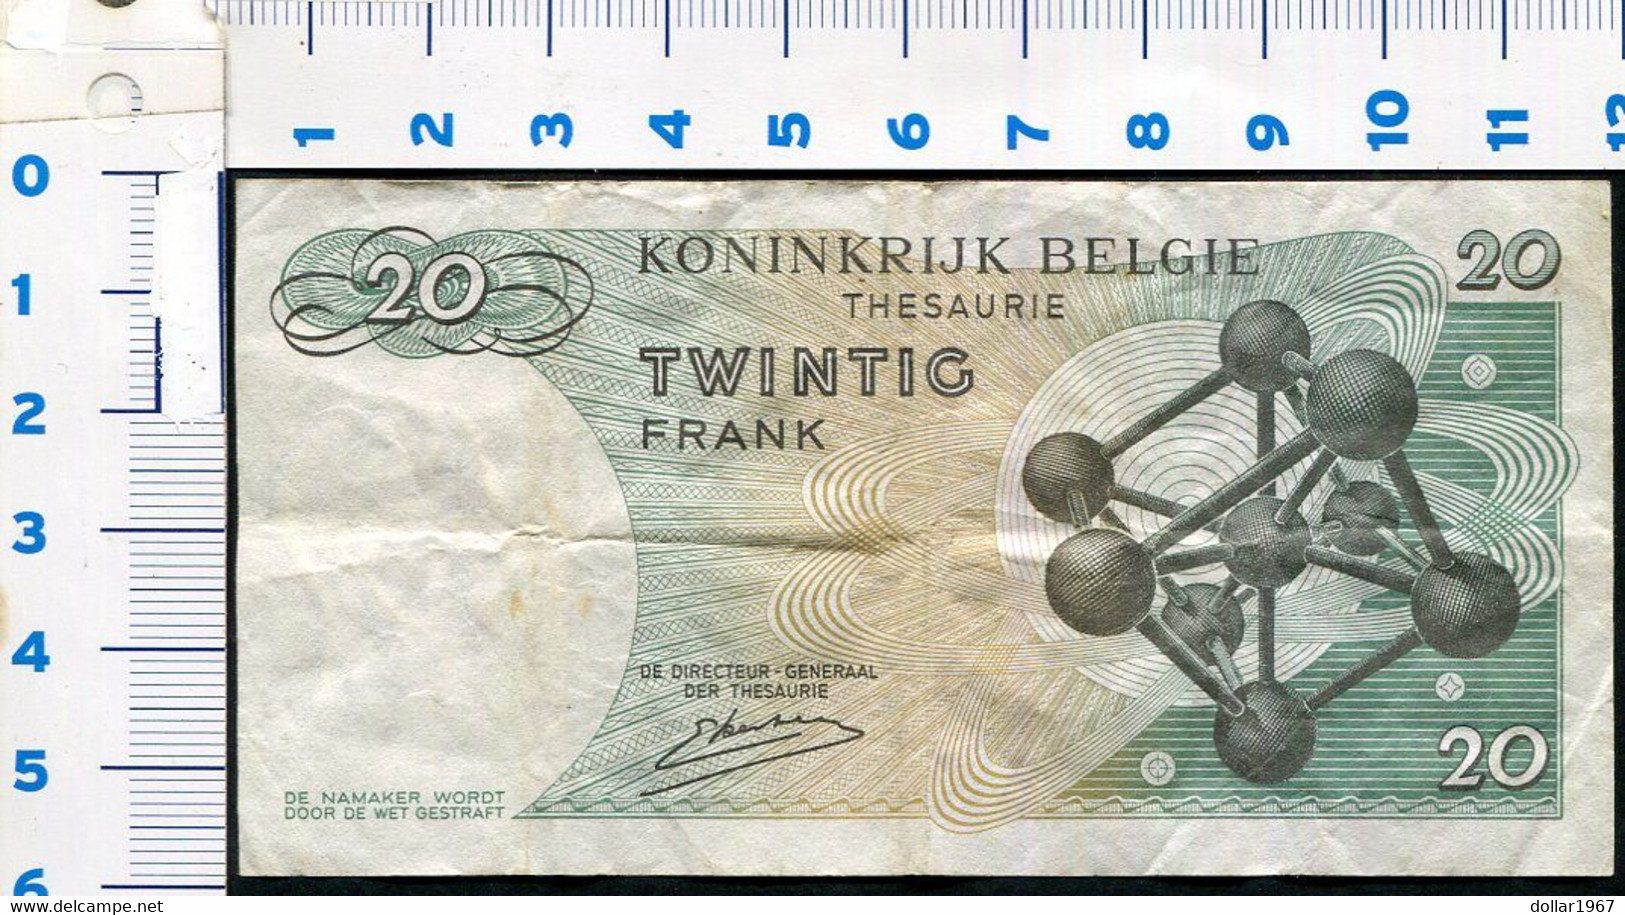 België Belgique Belgium 15 06 1964 -  20 Francs Atomium Baudouin.  3 P 8727637 - 20 Franchi